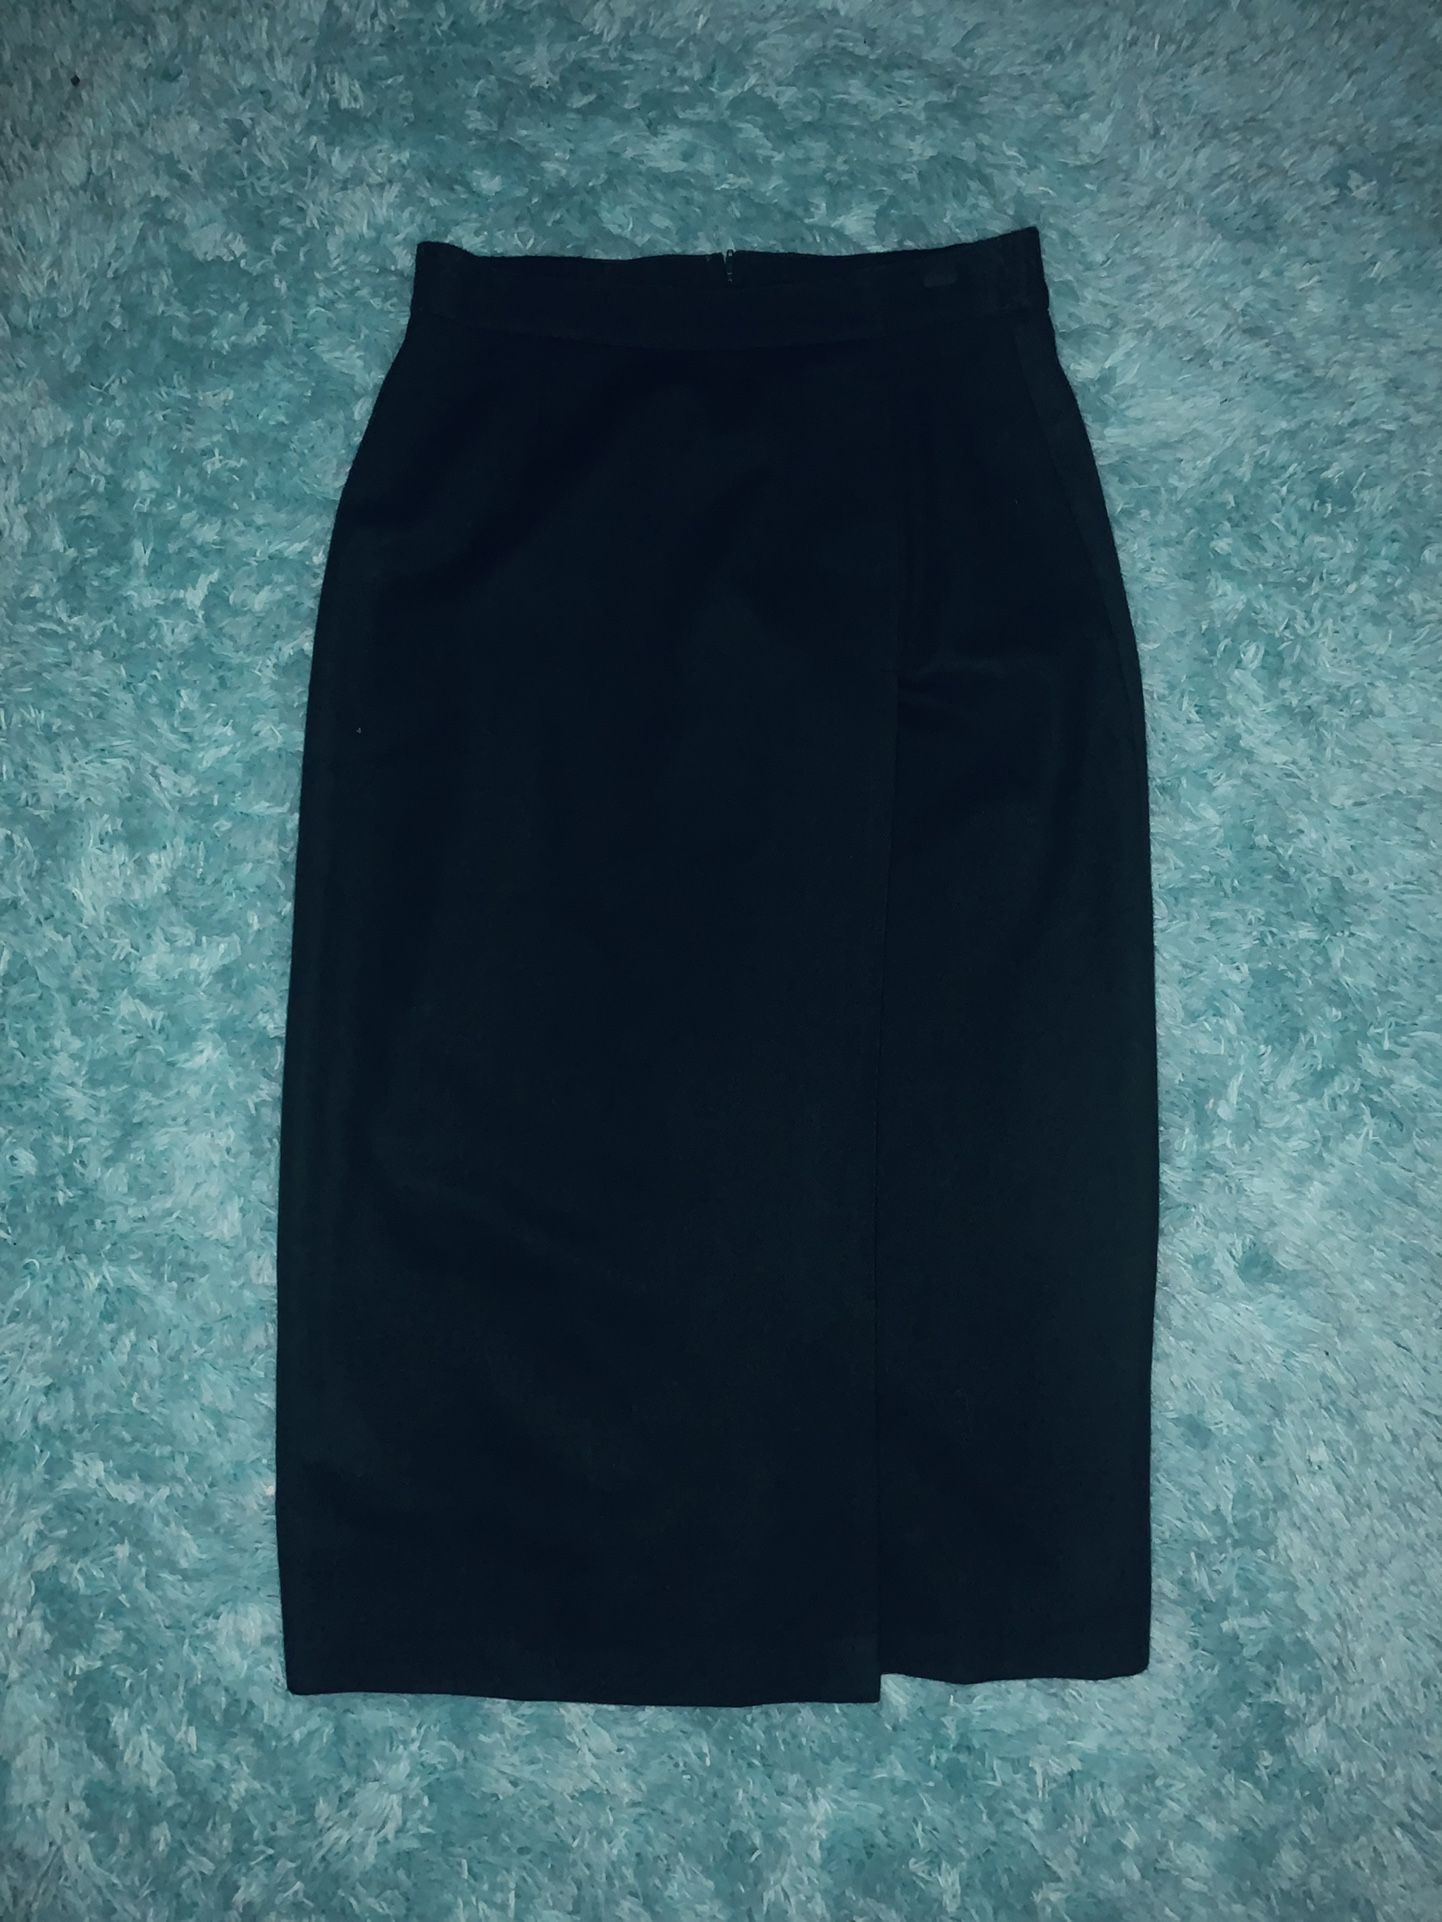 Norton Mcnaughton green pencil skirt - size 8    #NortonMcnaughton #longskirt #y2kskirt #vintageskirt #pencilskirt 